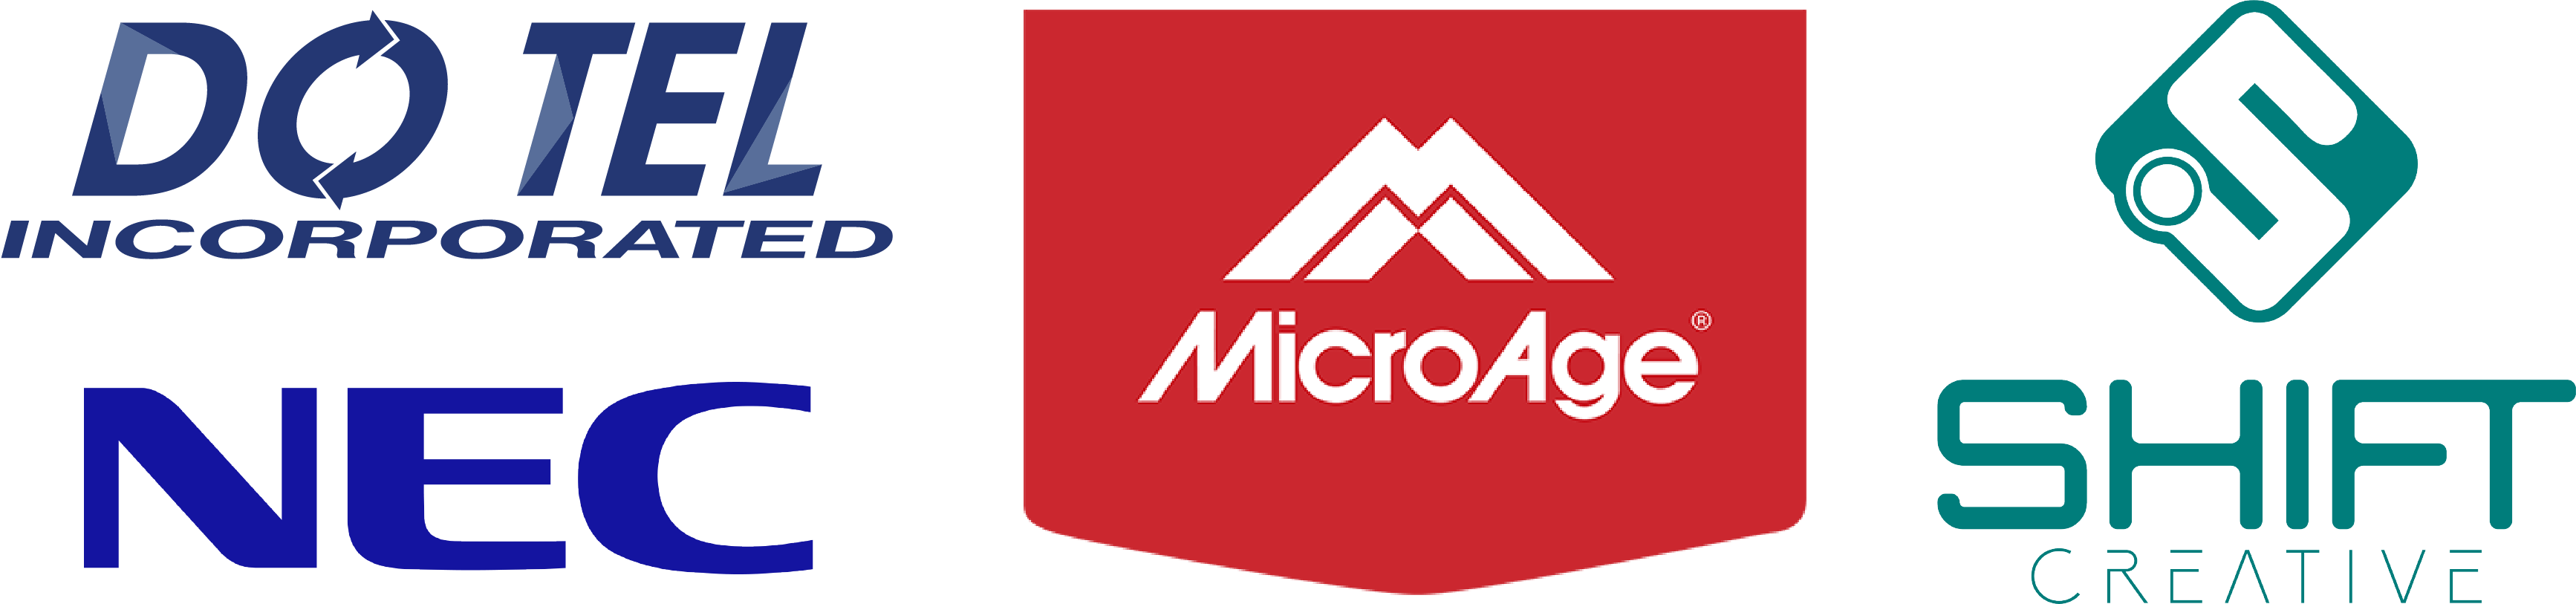 Microage/Do Tel